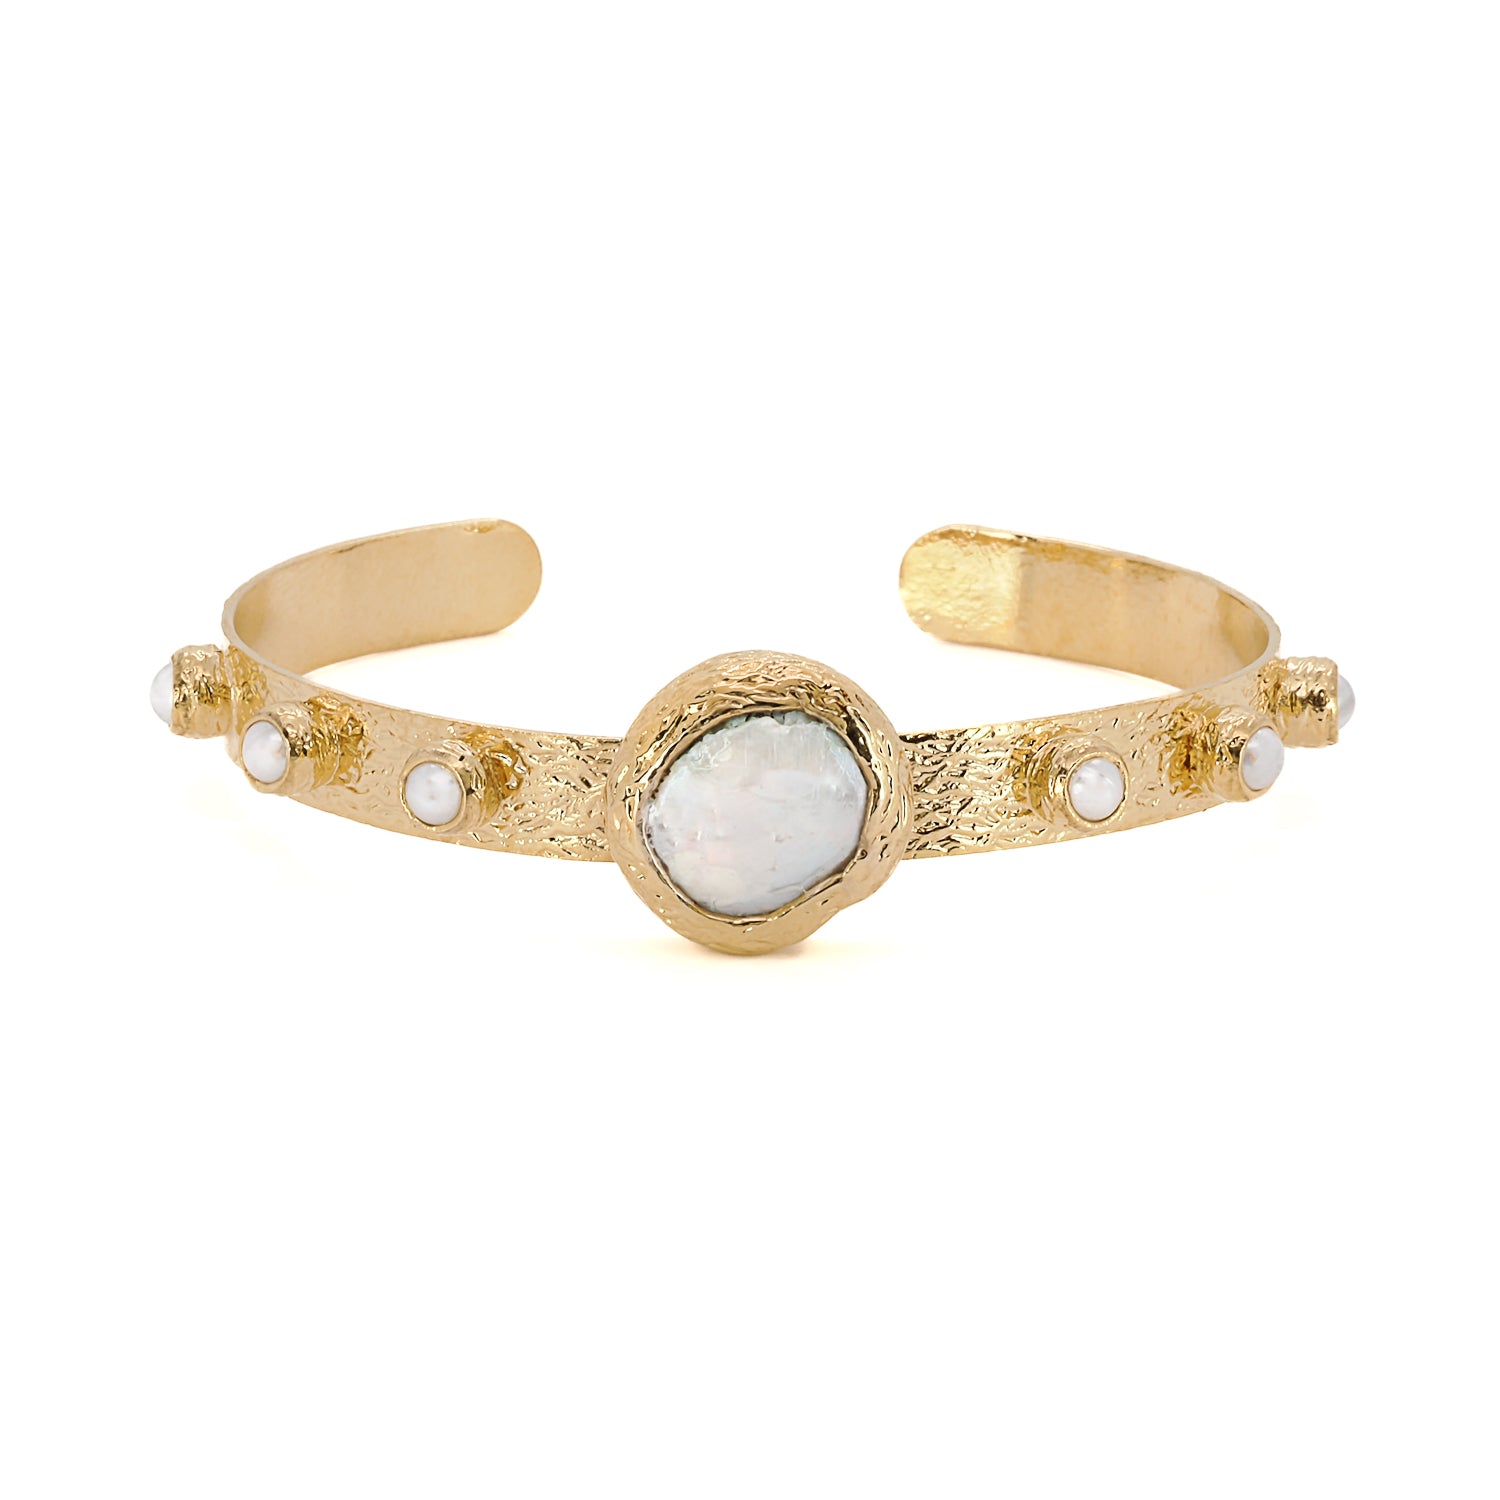 Luxurious Cleopatra Gold & Pearl Cuff Bracelet: A regal masterpiece.